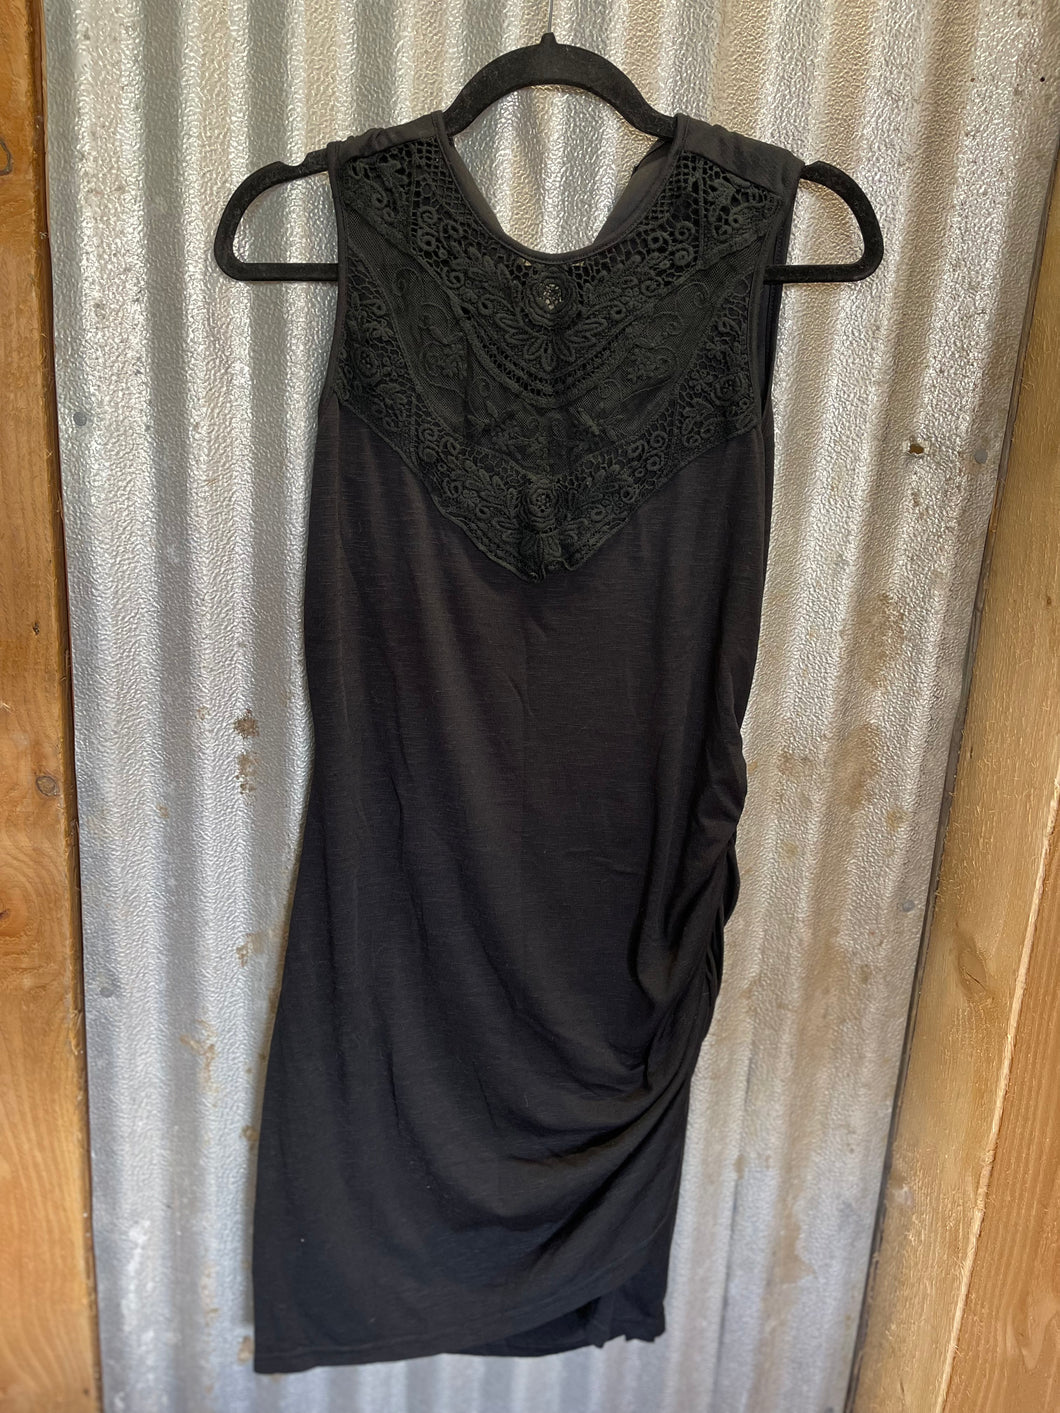 SMALL: Black Bodycon Dress